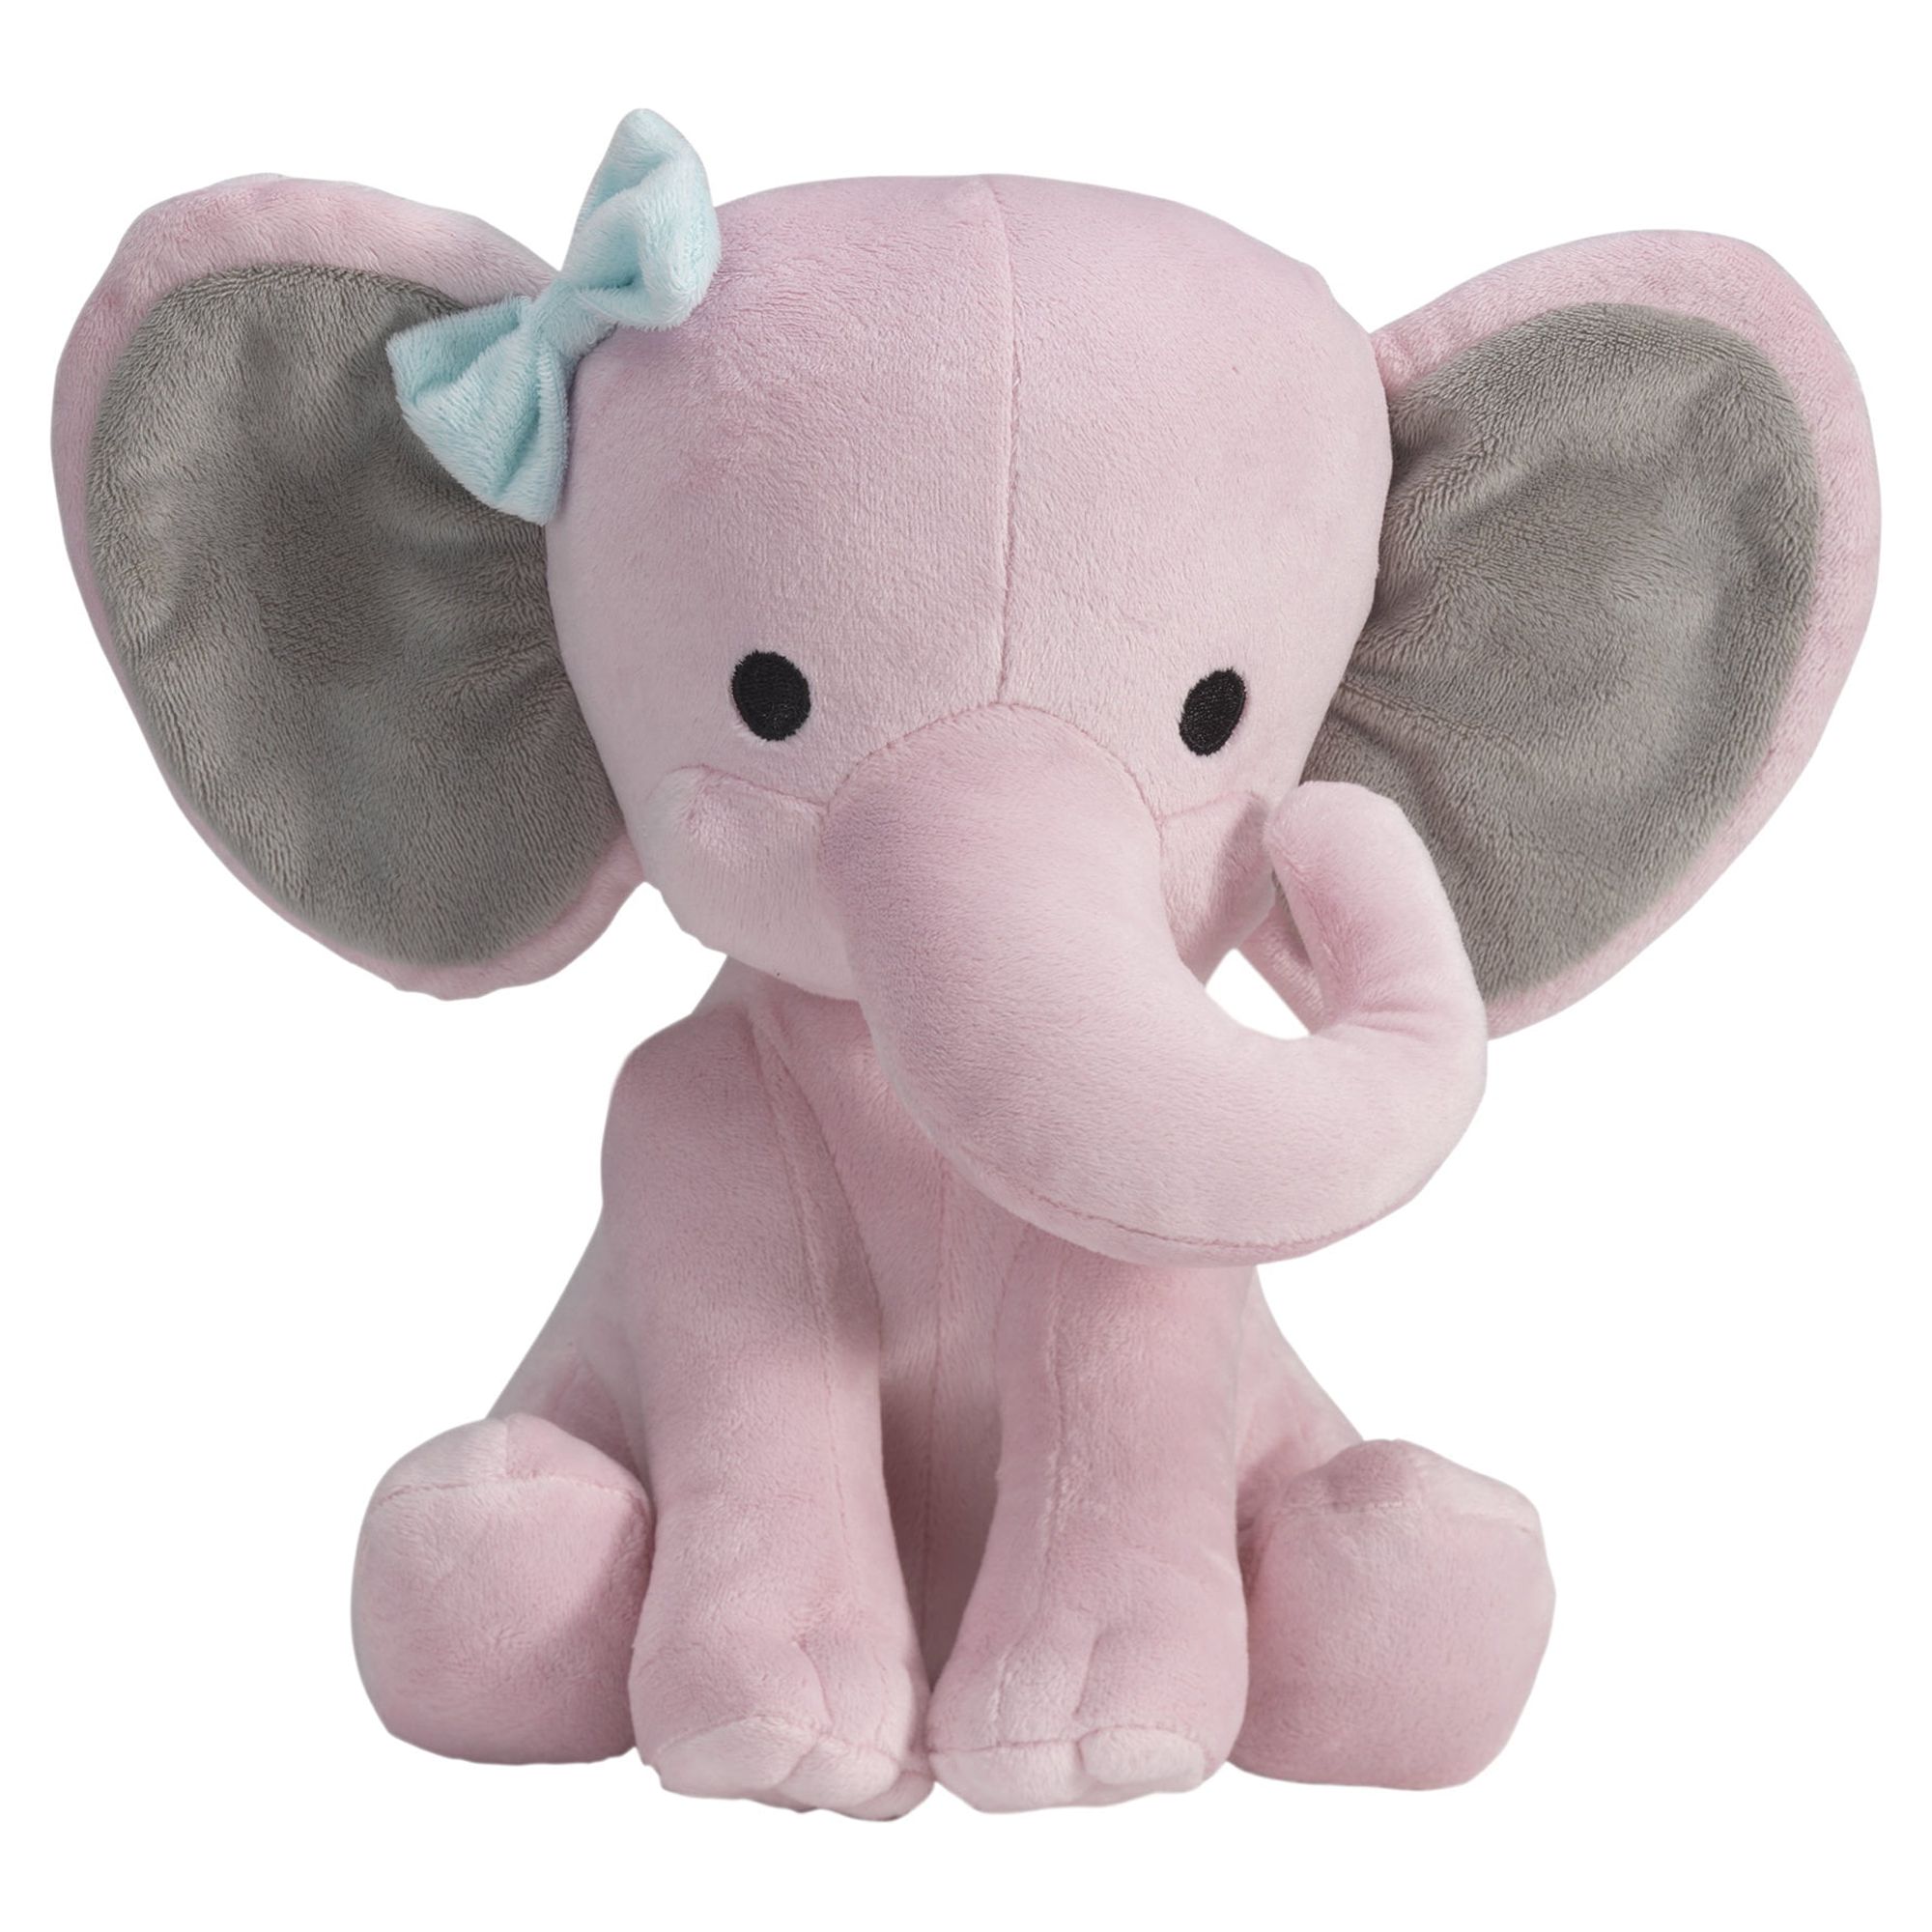 Bedtime Originals Twinkle Toes Pink Elephant Plush - 10” Hazel - image 1 of 7